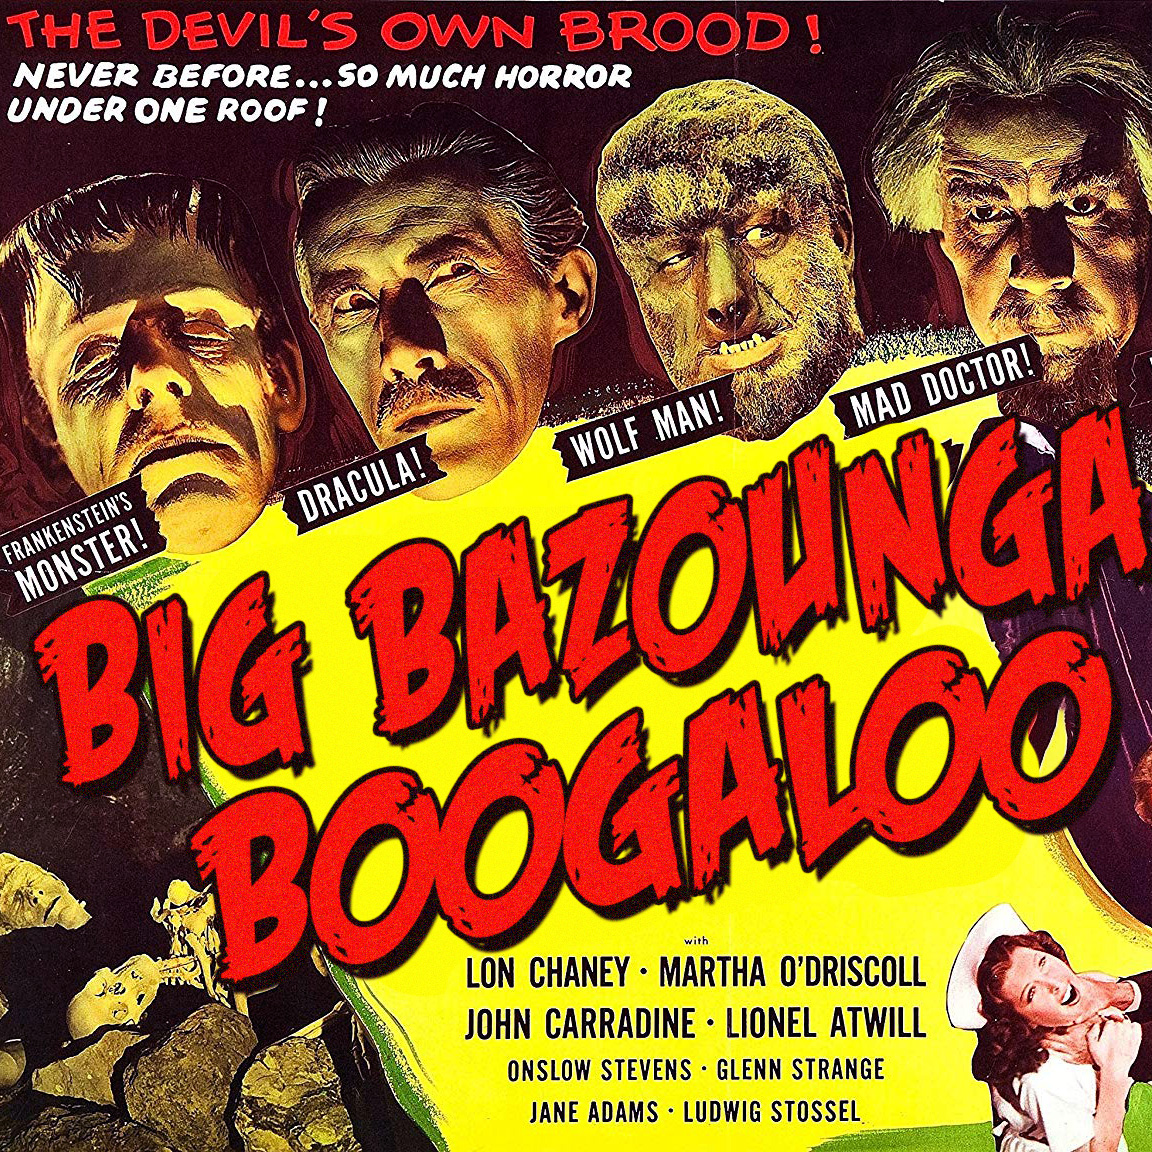 Big Bazounga Boogaloo /// MONSTERS HORROR SHOW!!!!